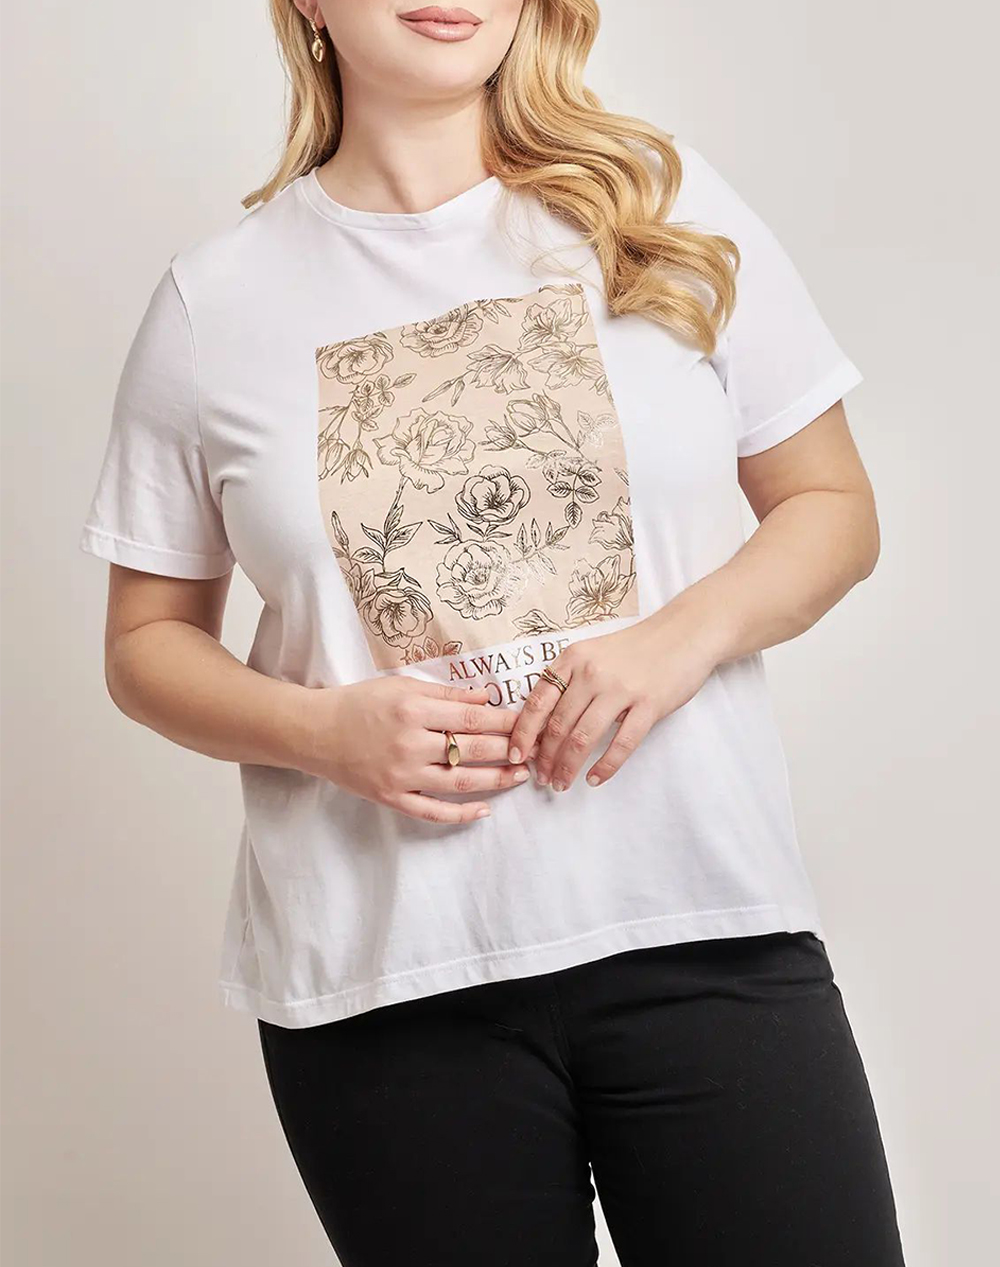 PARABITA T-shirt cu model tiparit